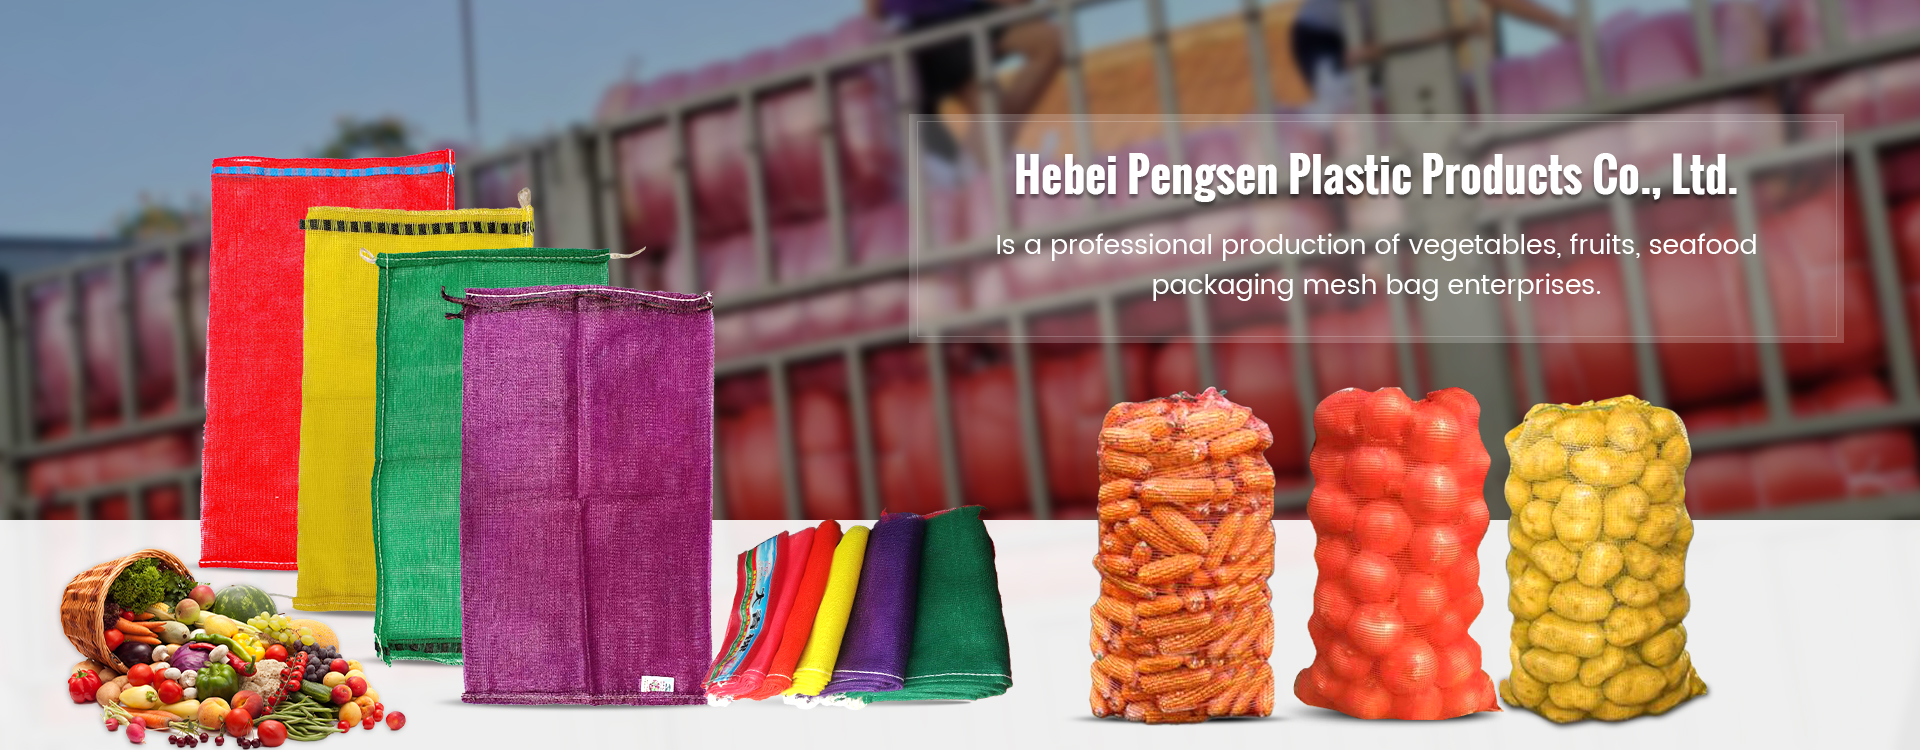 Hebei Pengsen Plastic Co., Ltd.